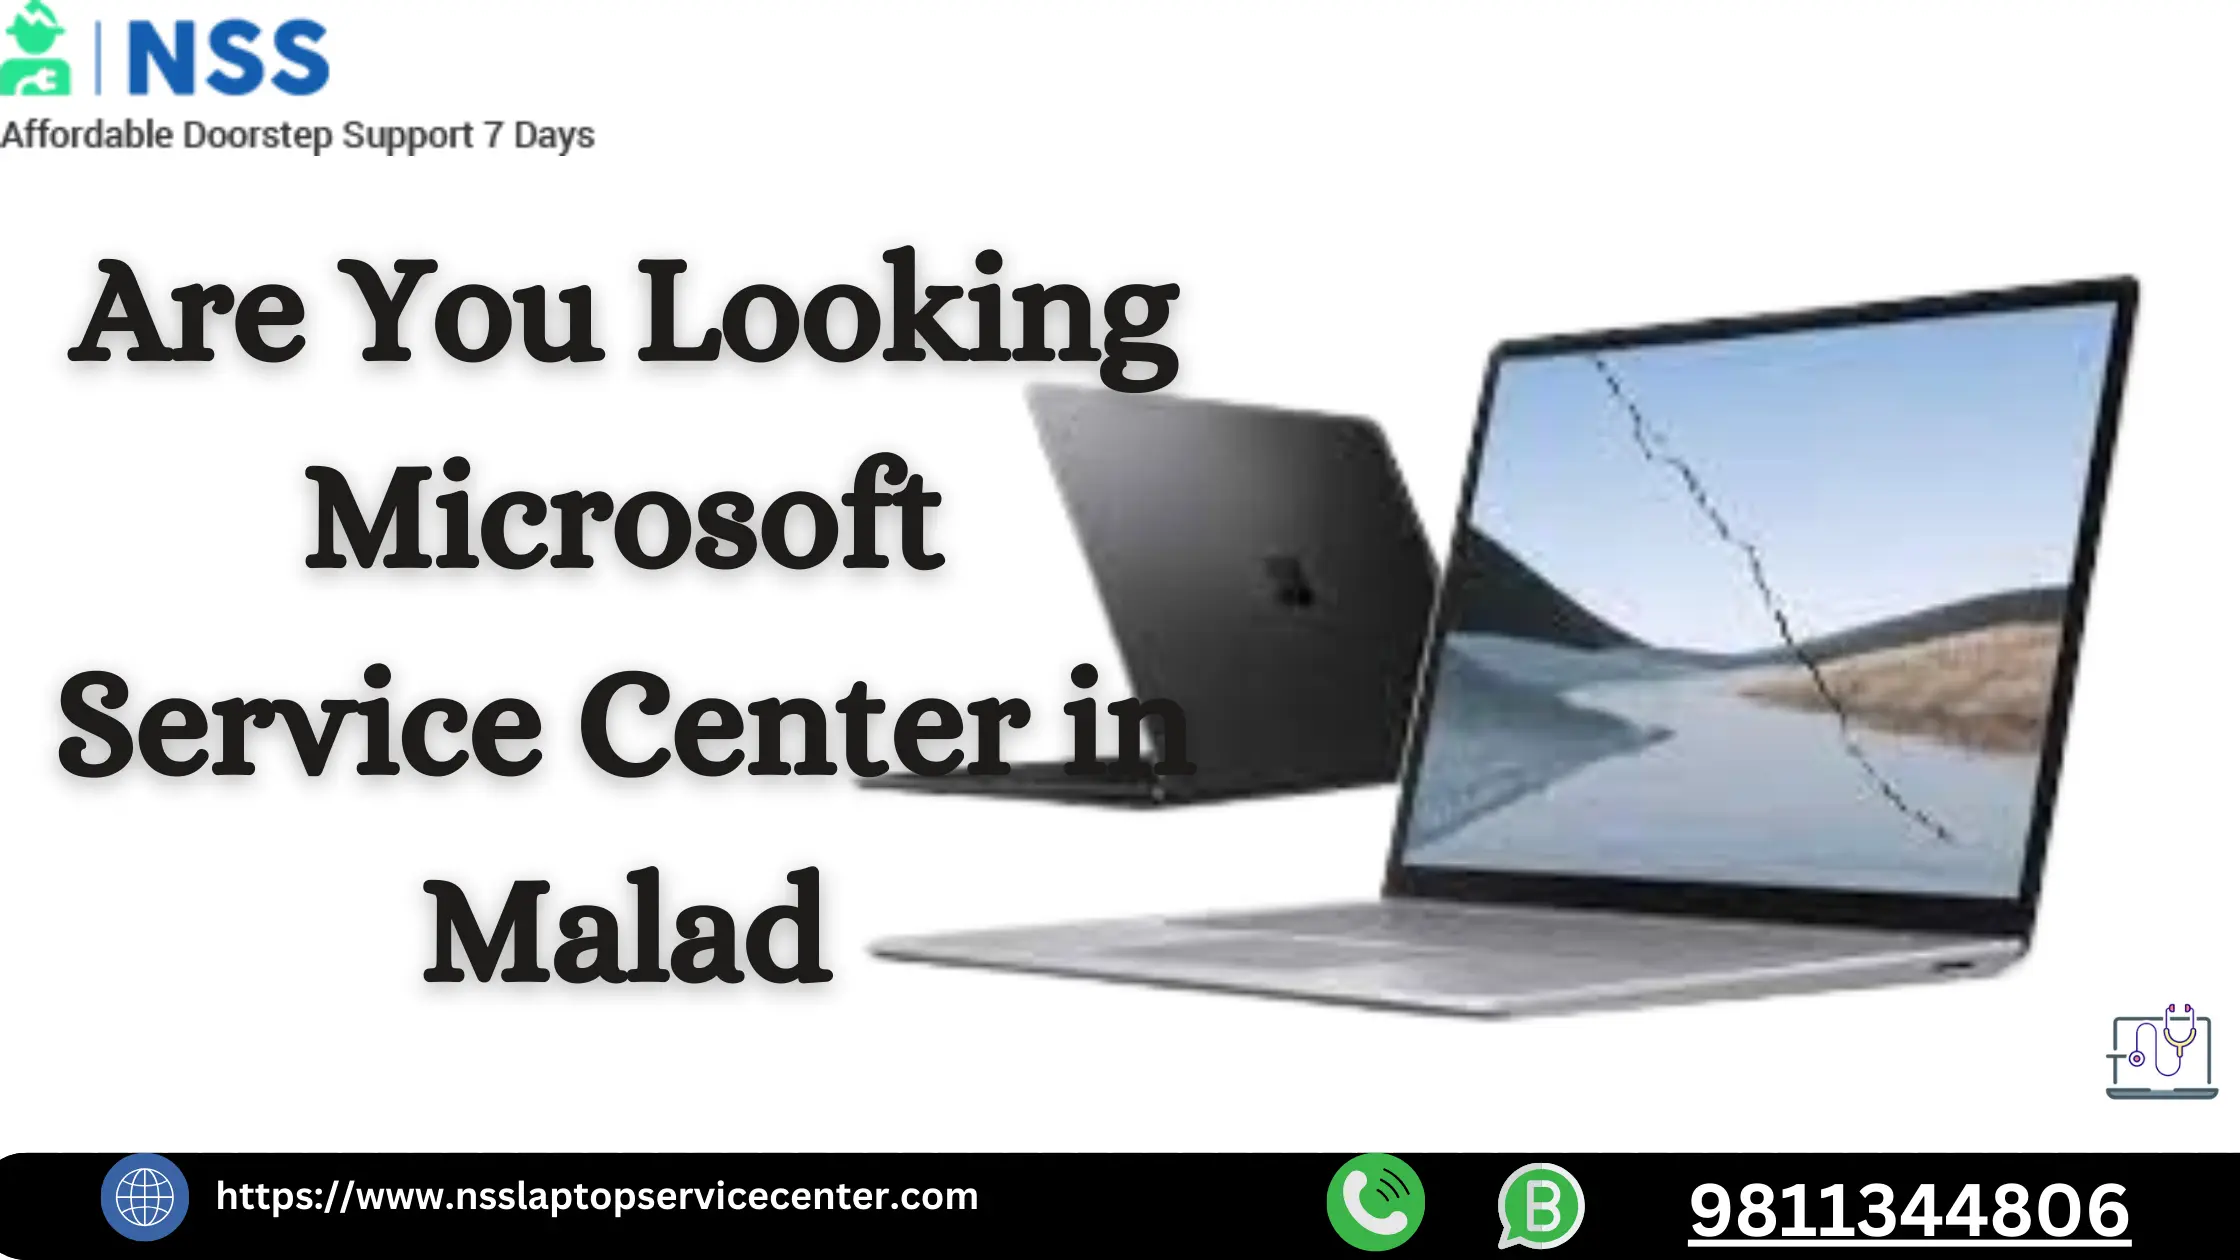 Are You Looking Microsoft Service Center in Malad Near Mumbai